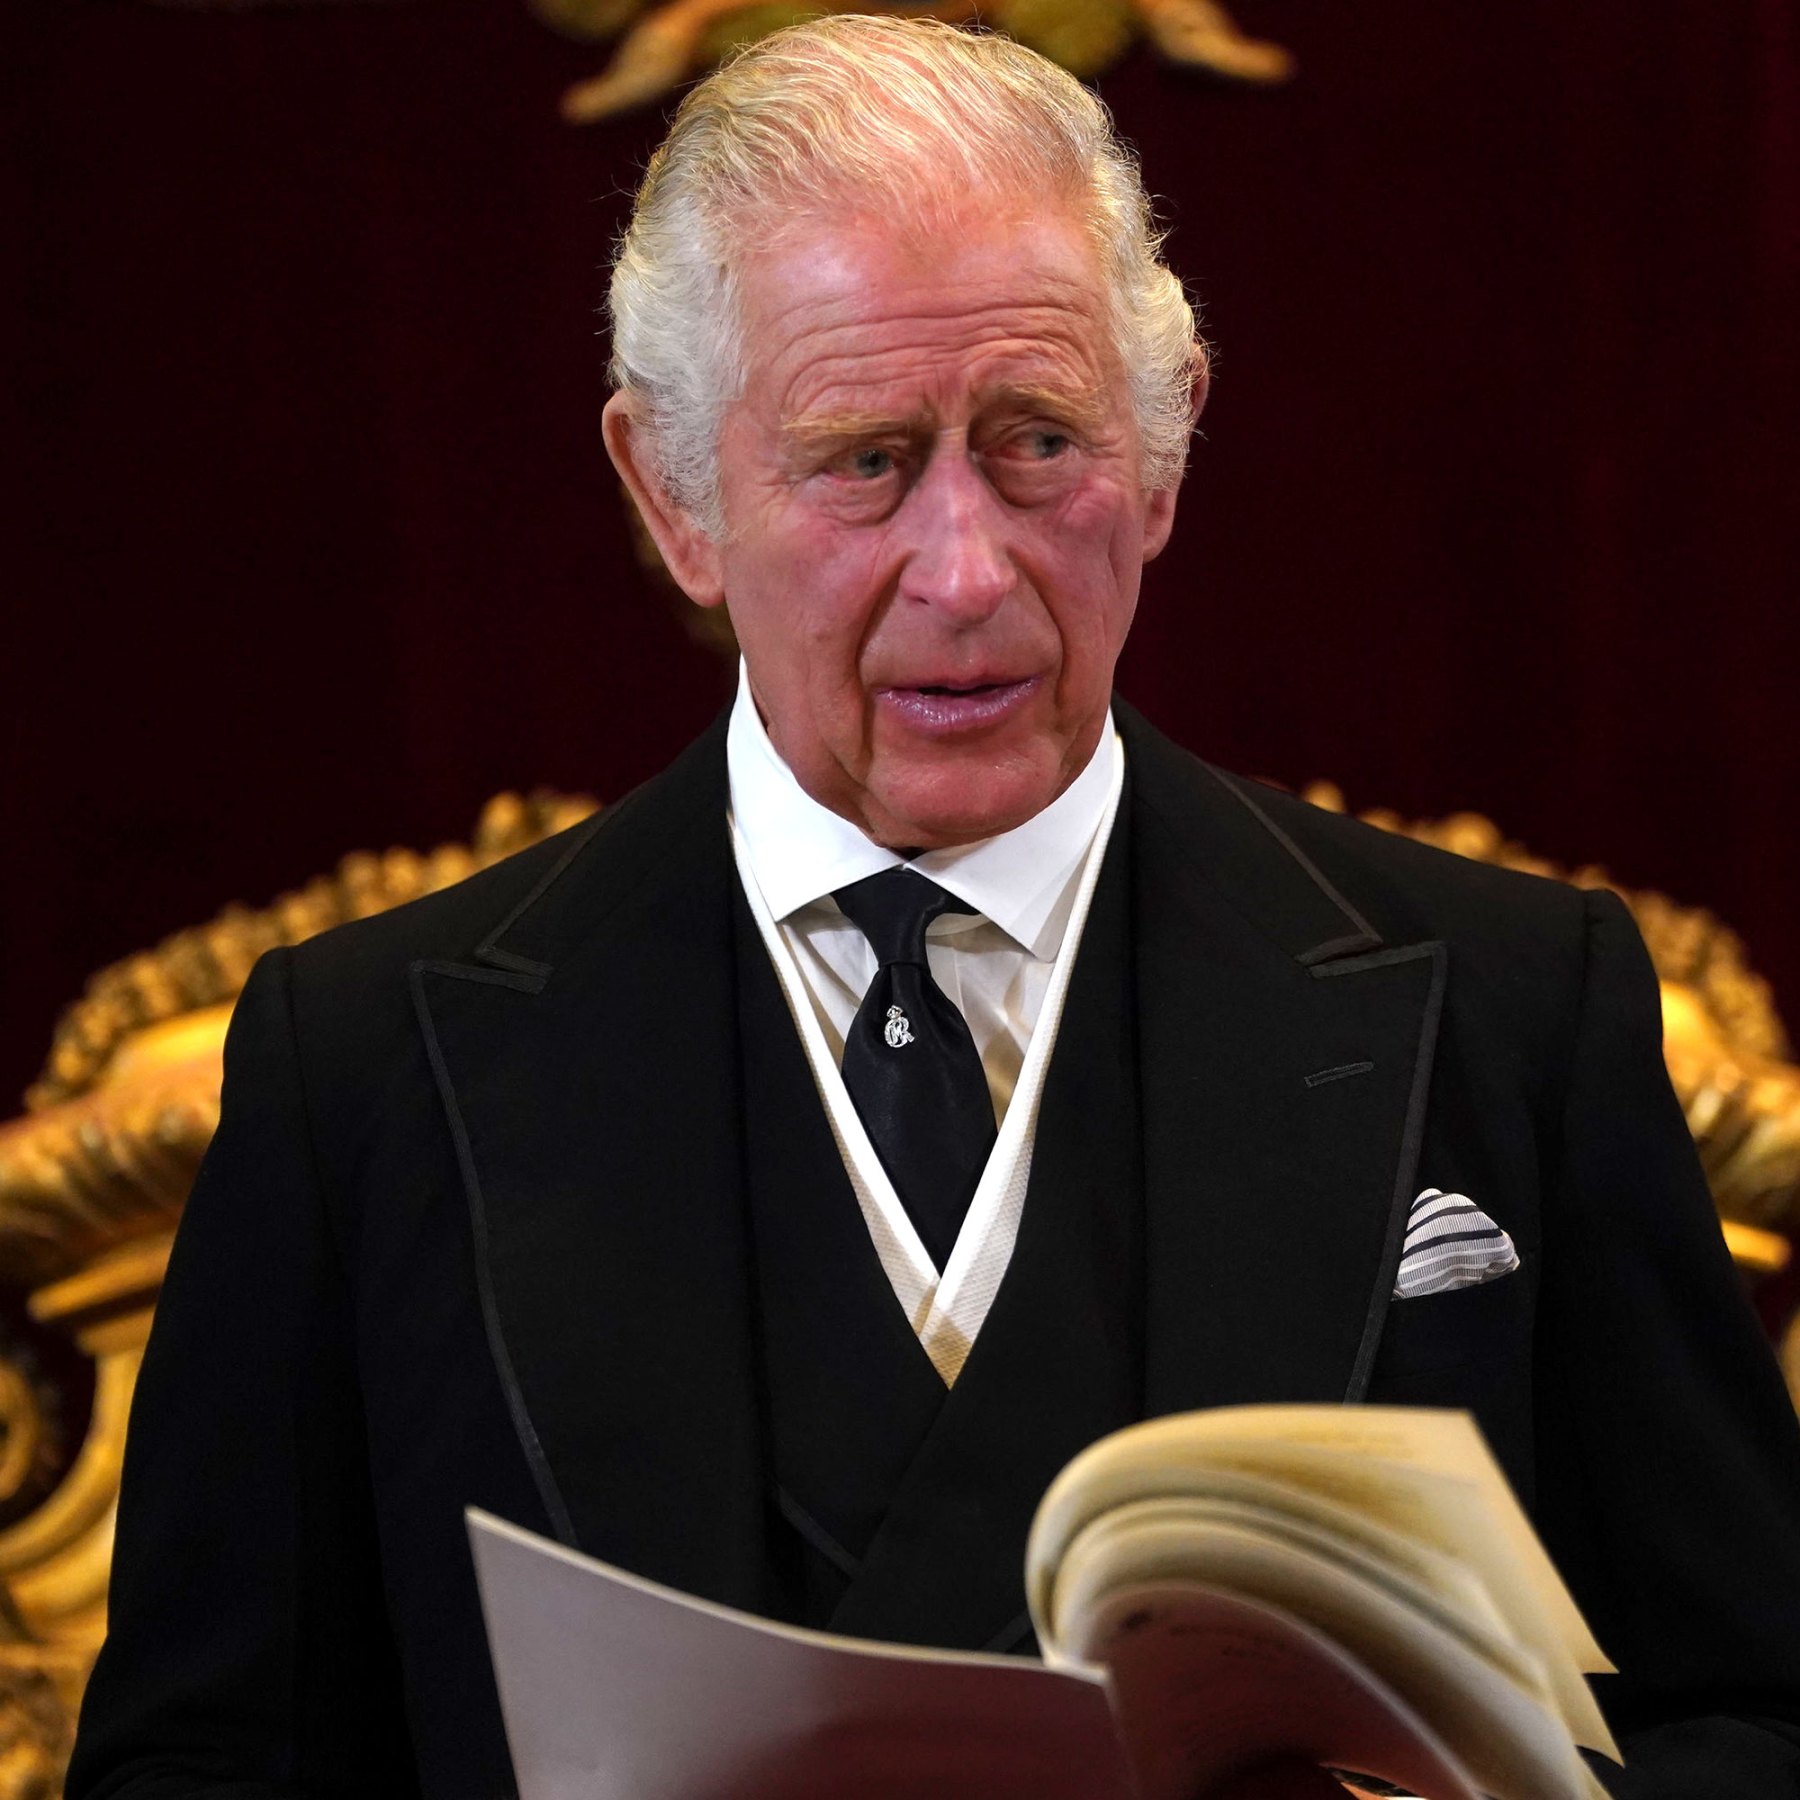 King Charles III Won't Appear on British Money Until 2024